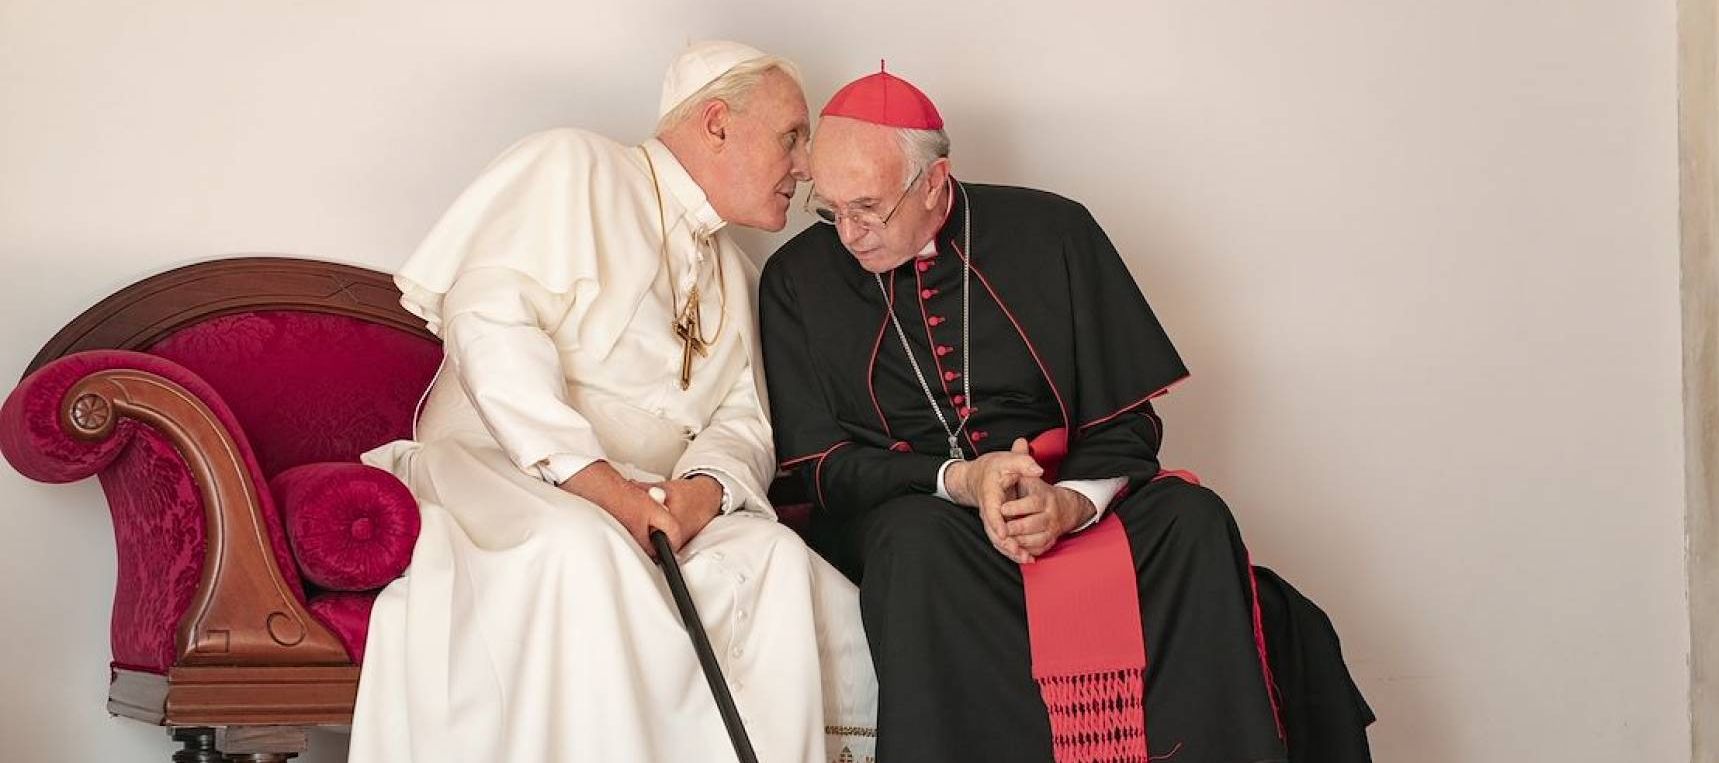 Two popes, the movie. Idylle en werkelijkheid.